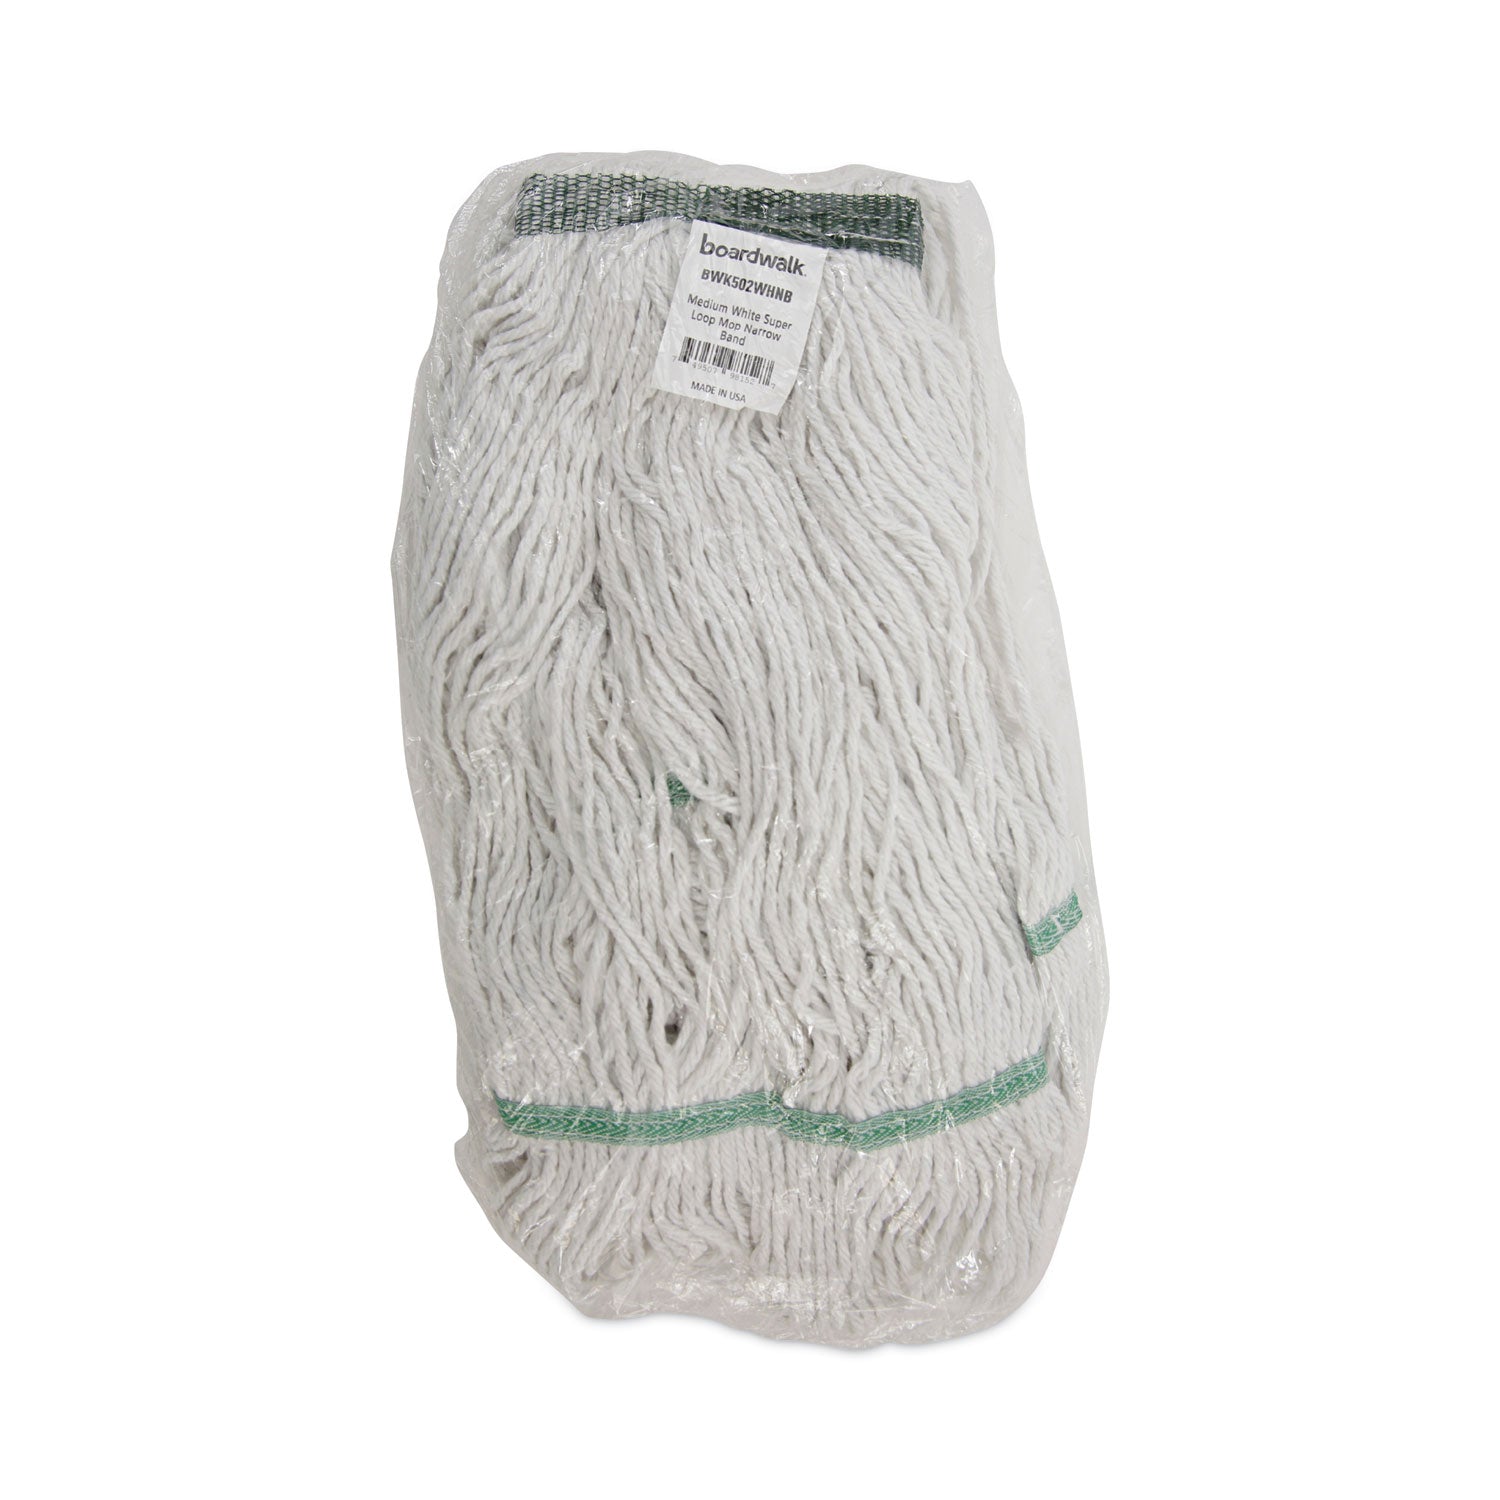 mop-head-premium-standard-head-cotton-rayon-fiber-medium-white_bwk502whnb - 7